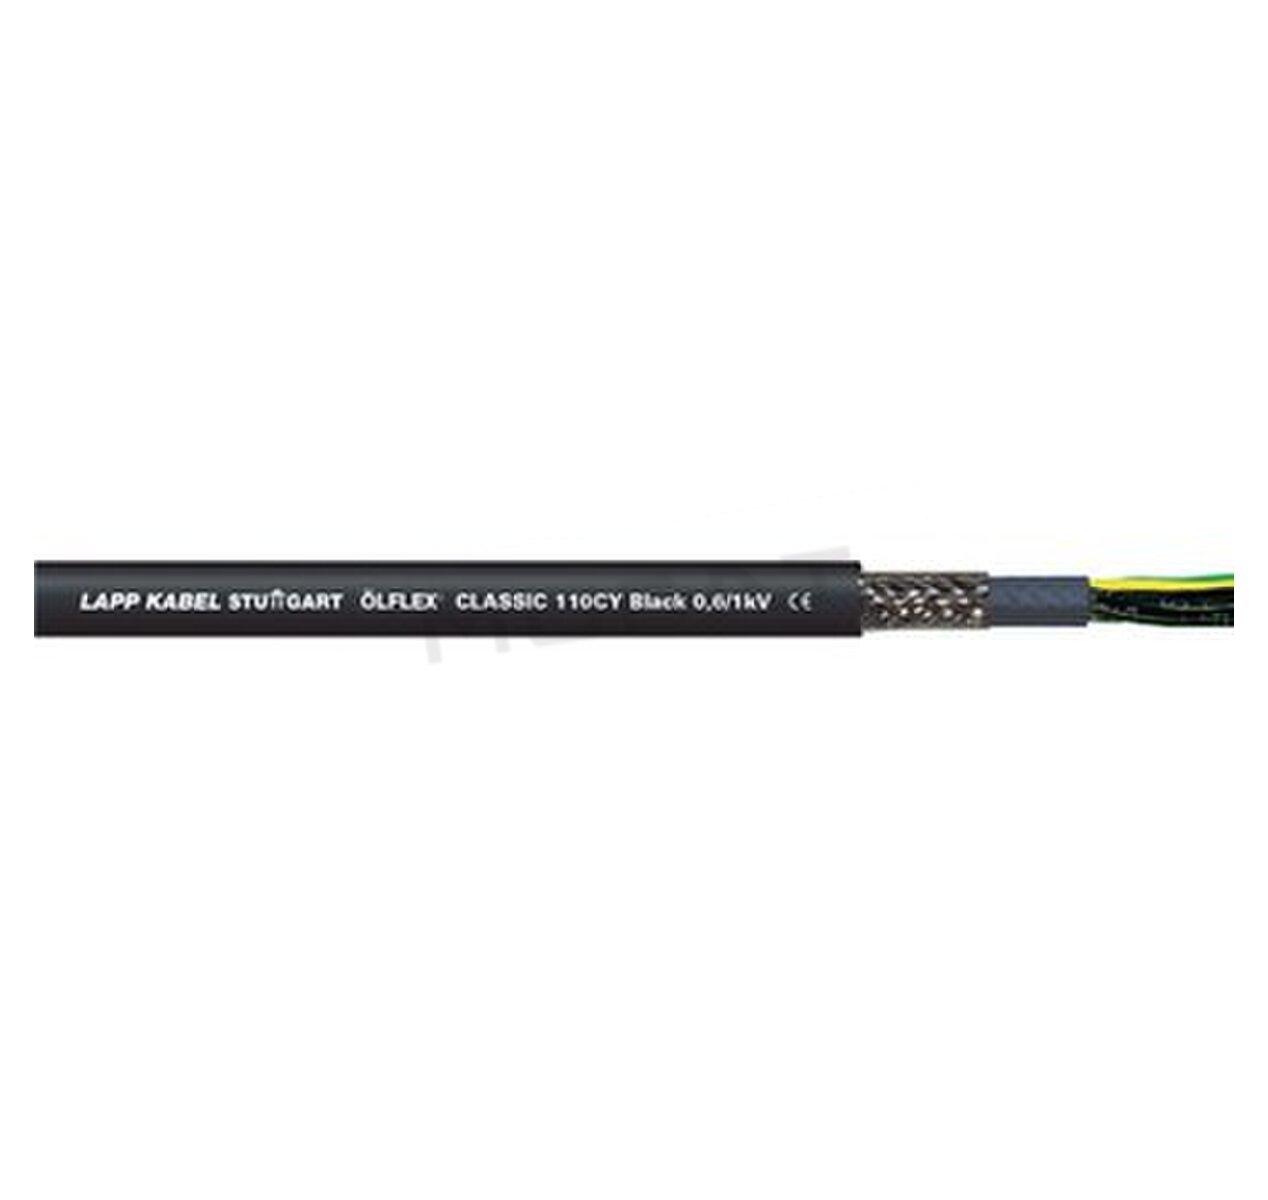 Kábel OLFLEX CLASSIC 110 CY BLACK 0,6/1kV 12Gx2,5 mm2